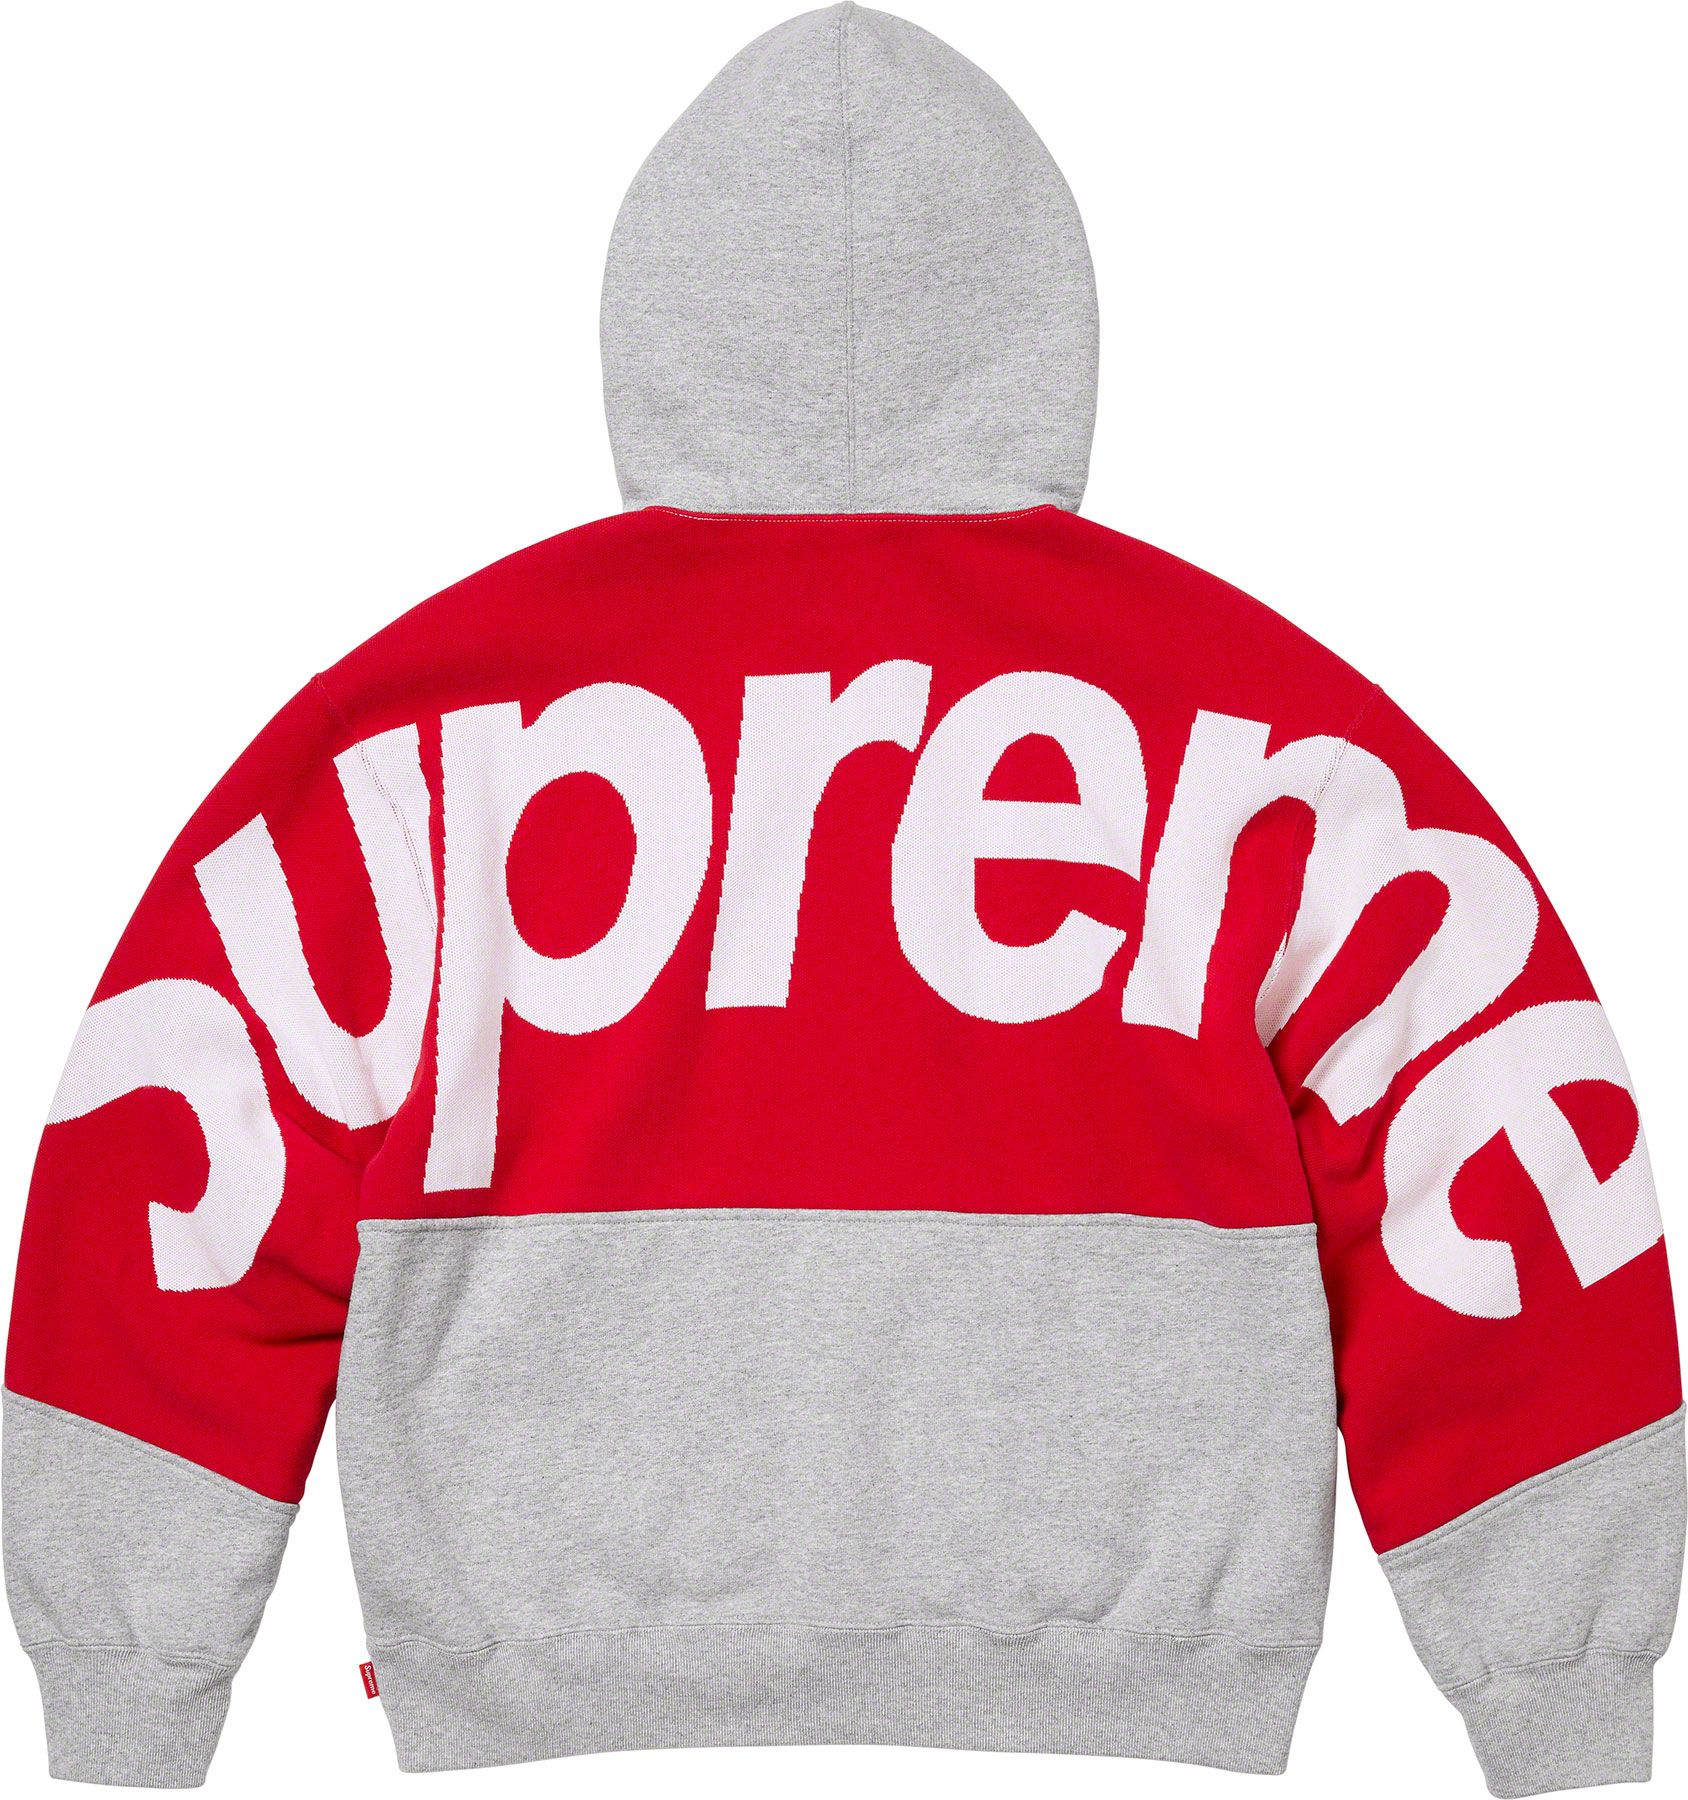 Big Logo Jacquard Hooded Sweatshirt – Supreme